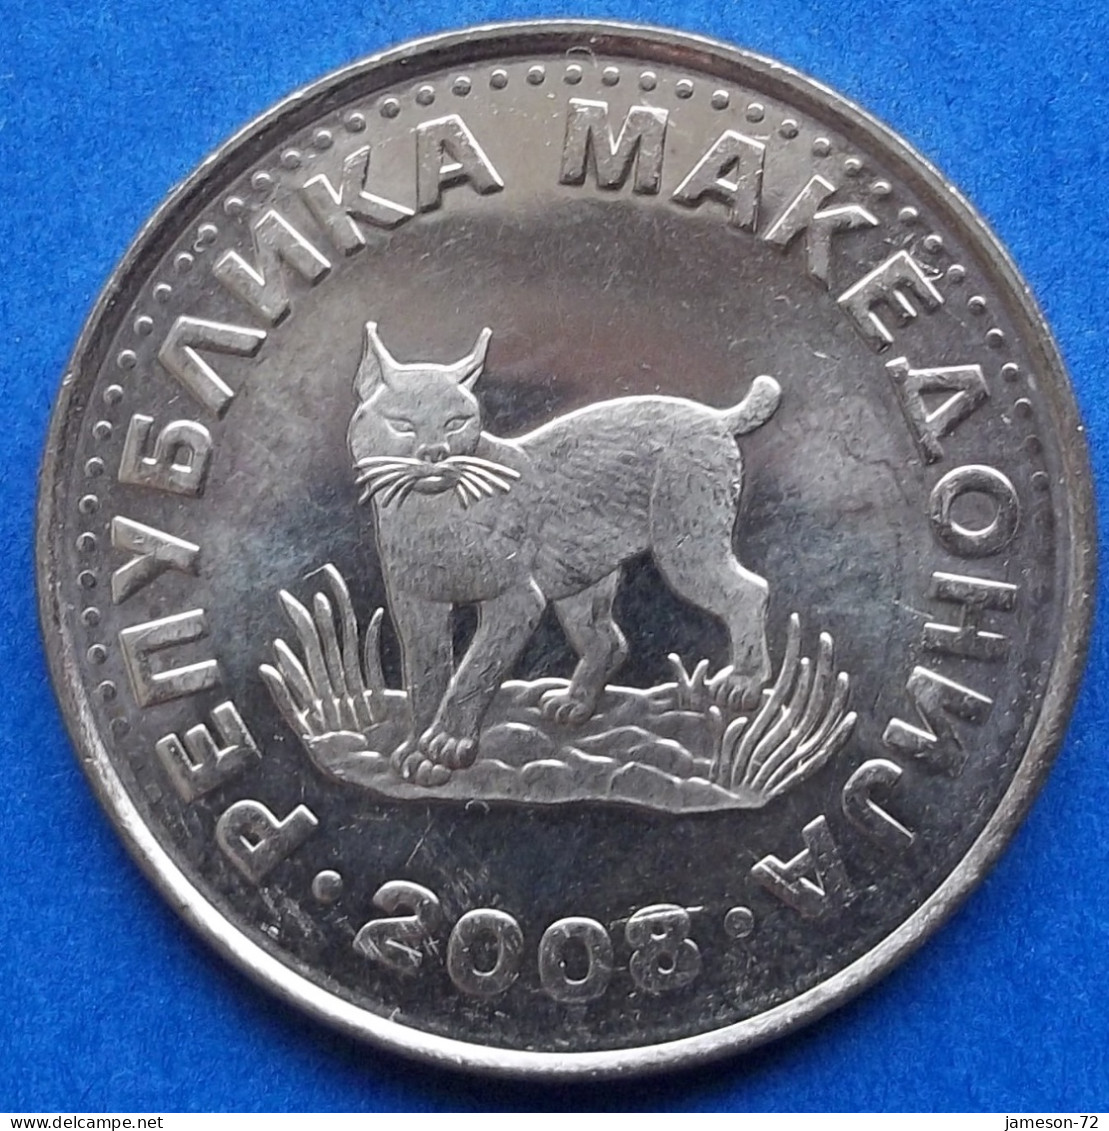 MACEDONIA - 5 Denari 2008 "European Lynx" KM# 4 Republic (1991) - Edelweiss Coins - North Macedonia